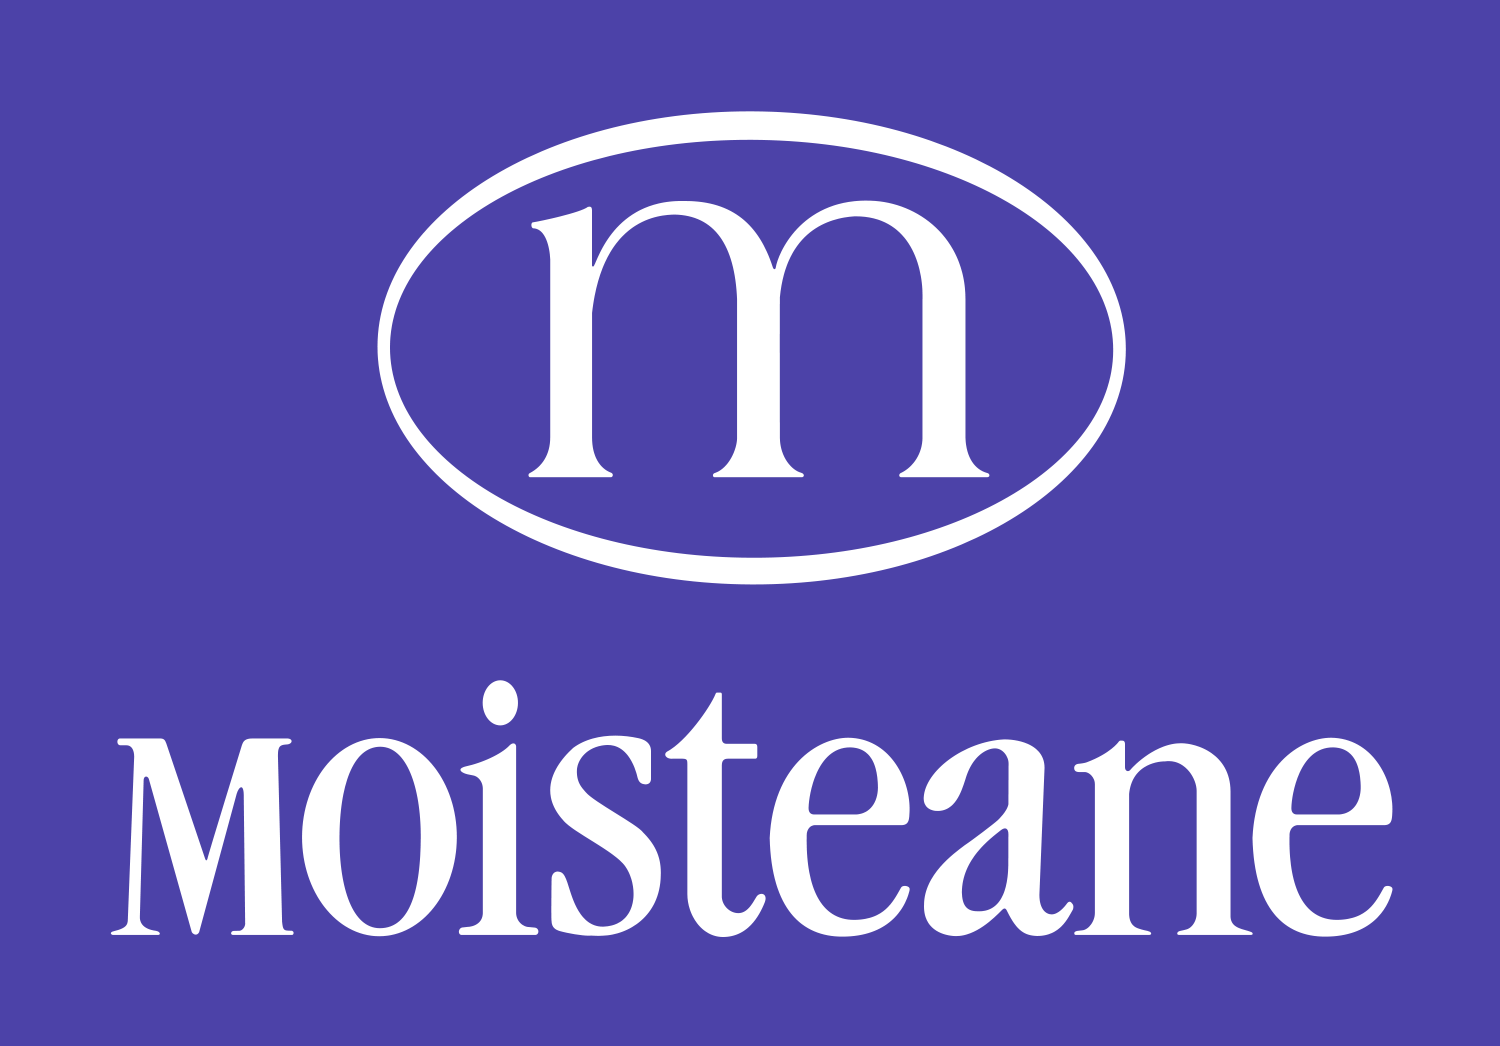 Moisteane